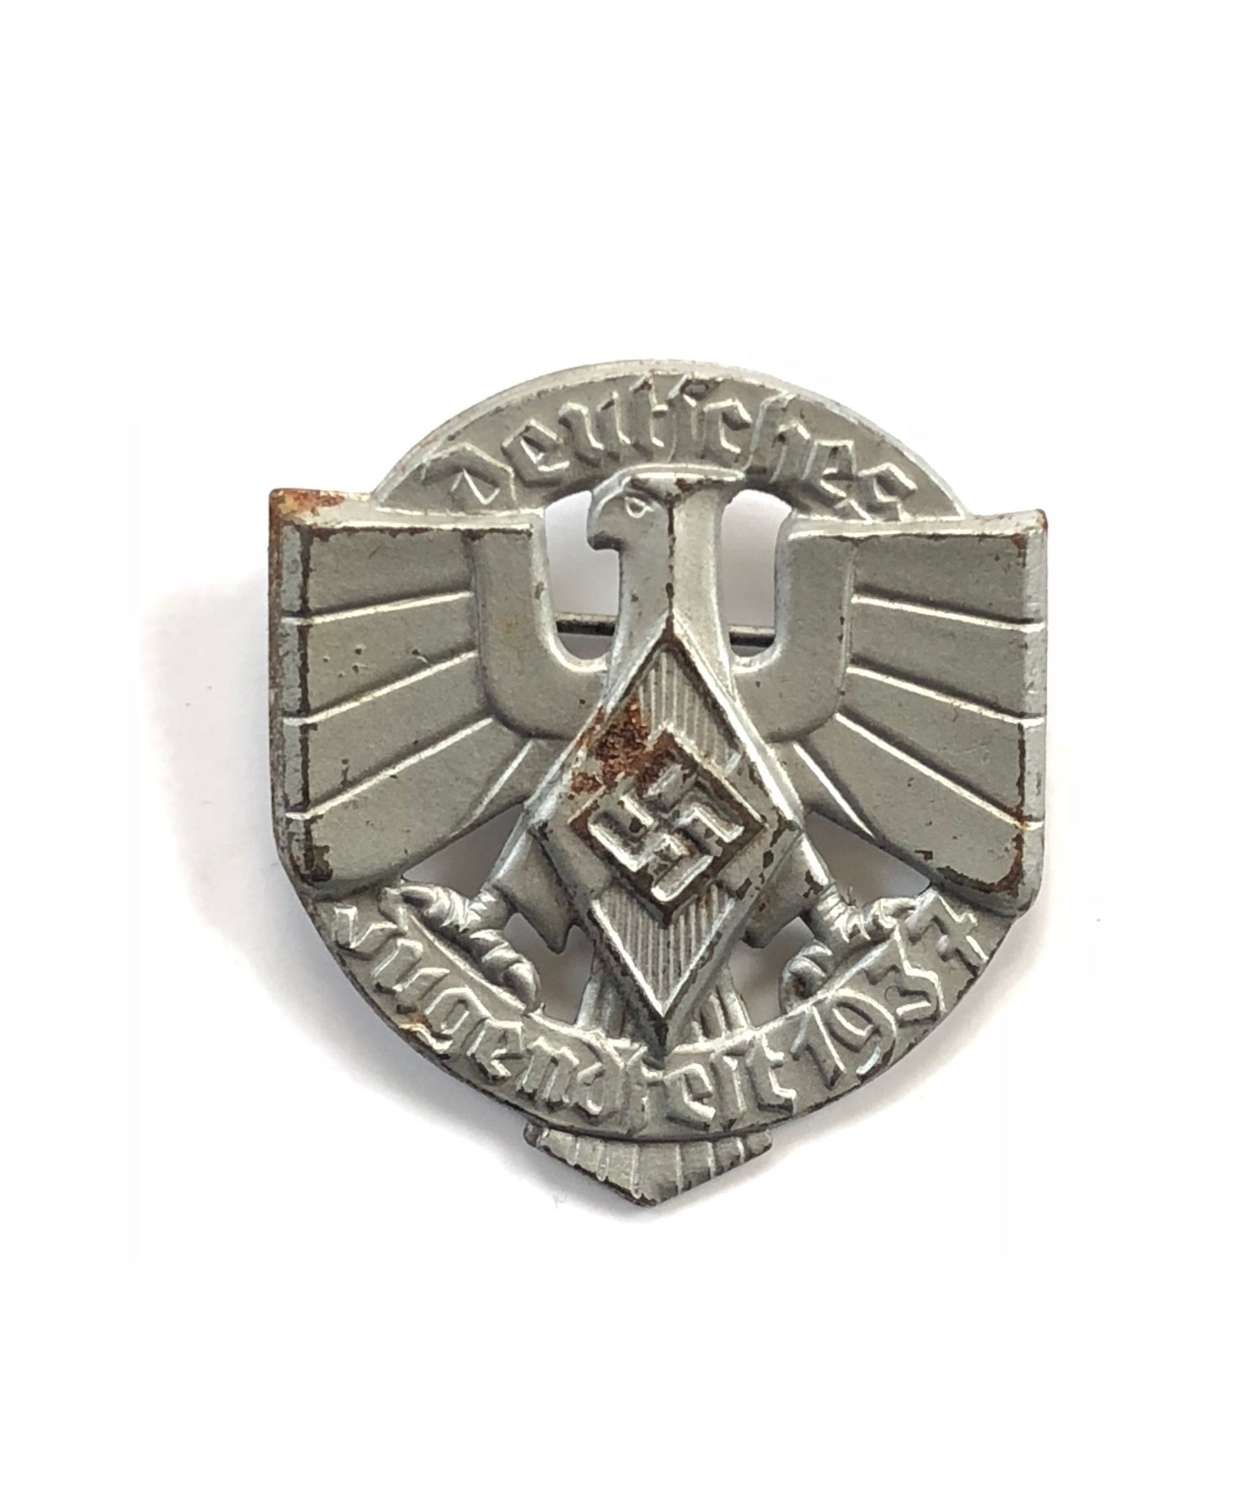 WW2 German Fund Raising “Tinnie” Badge.